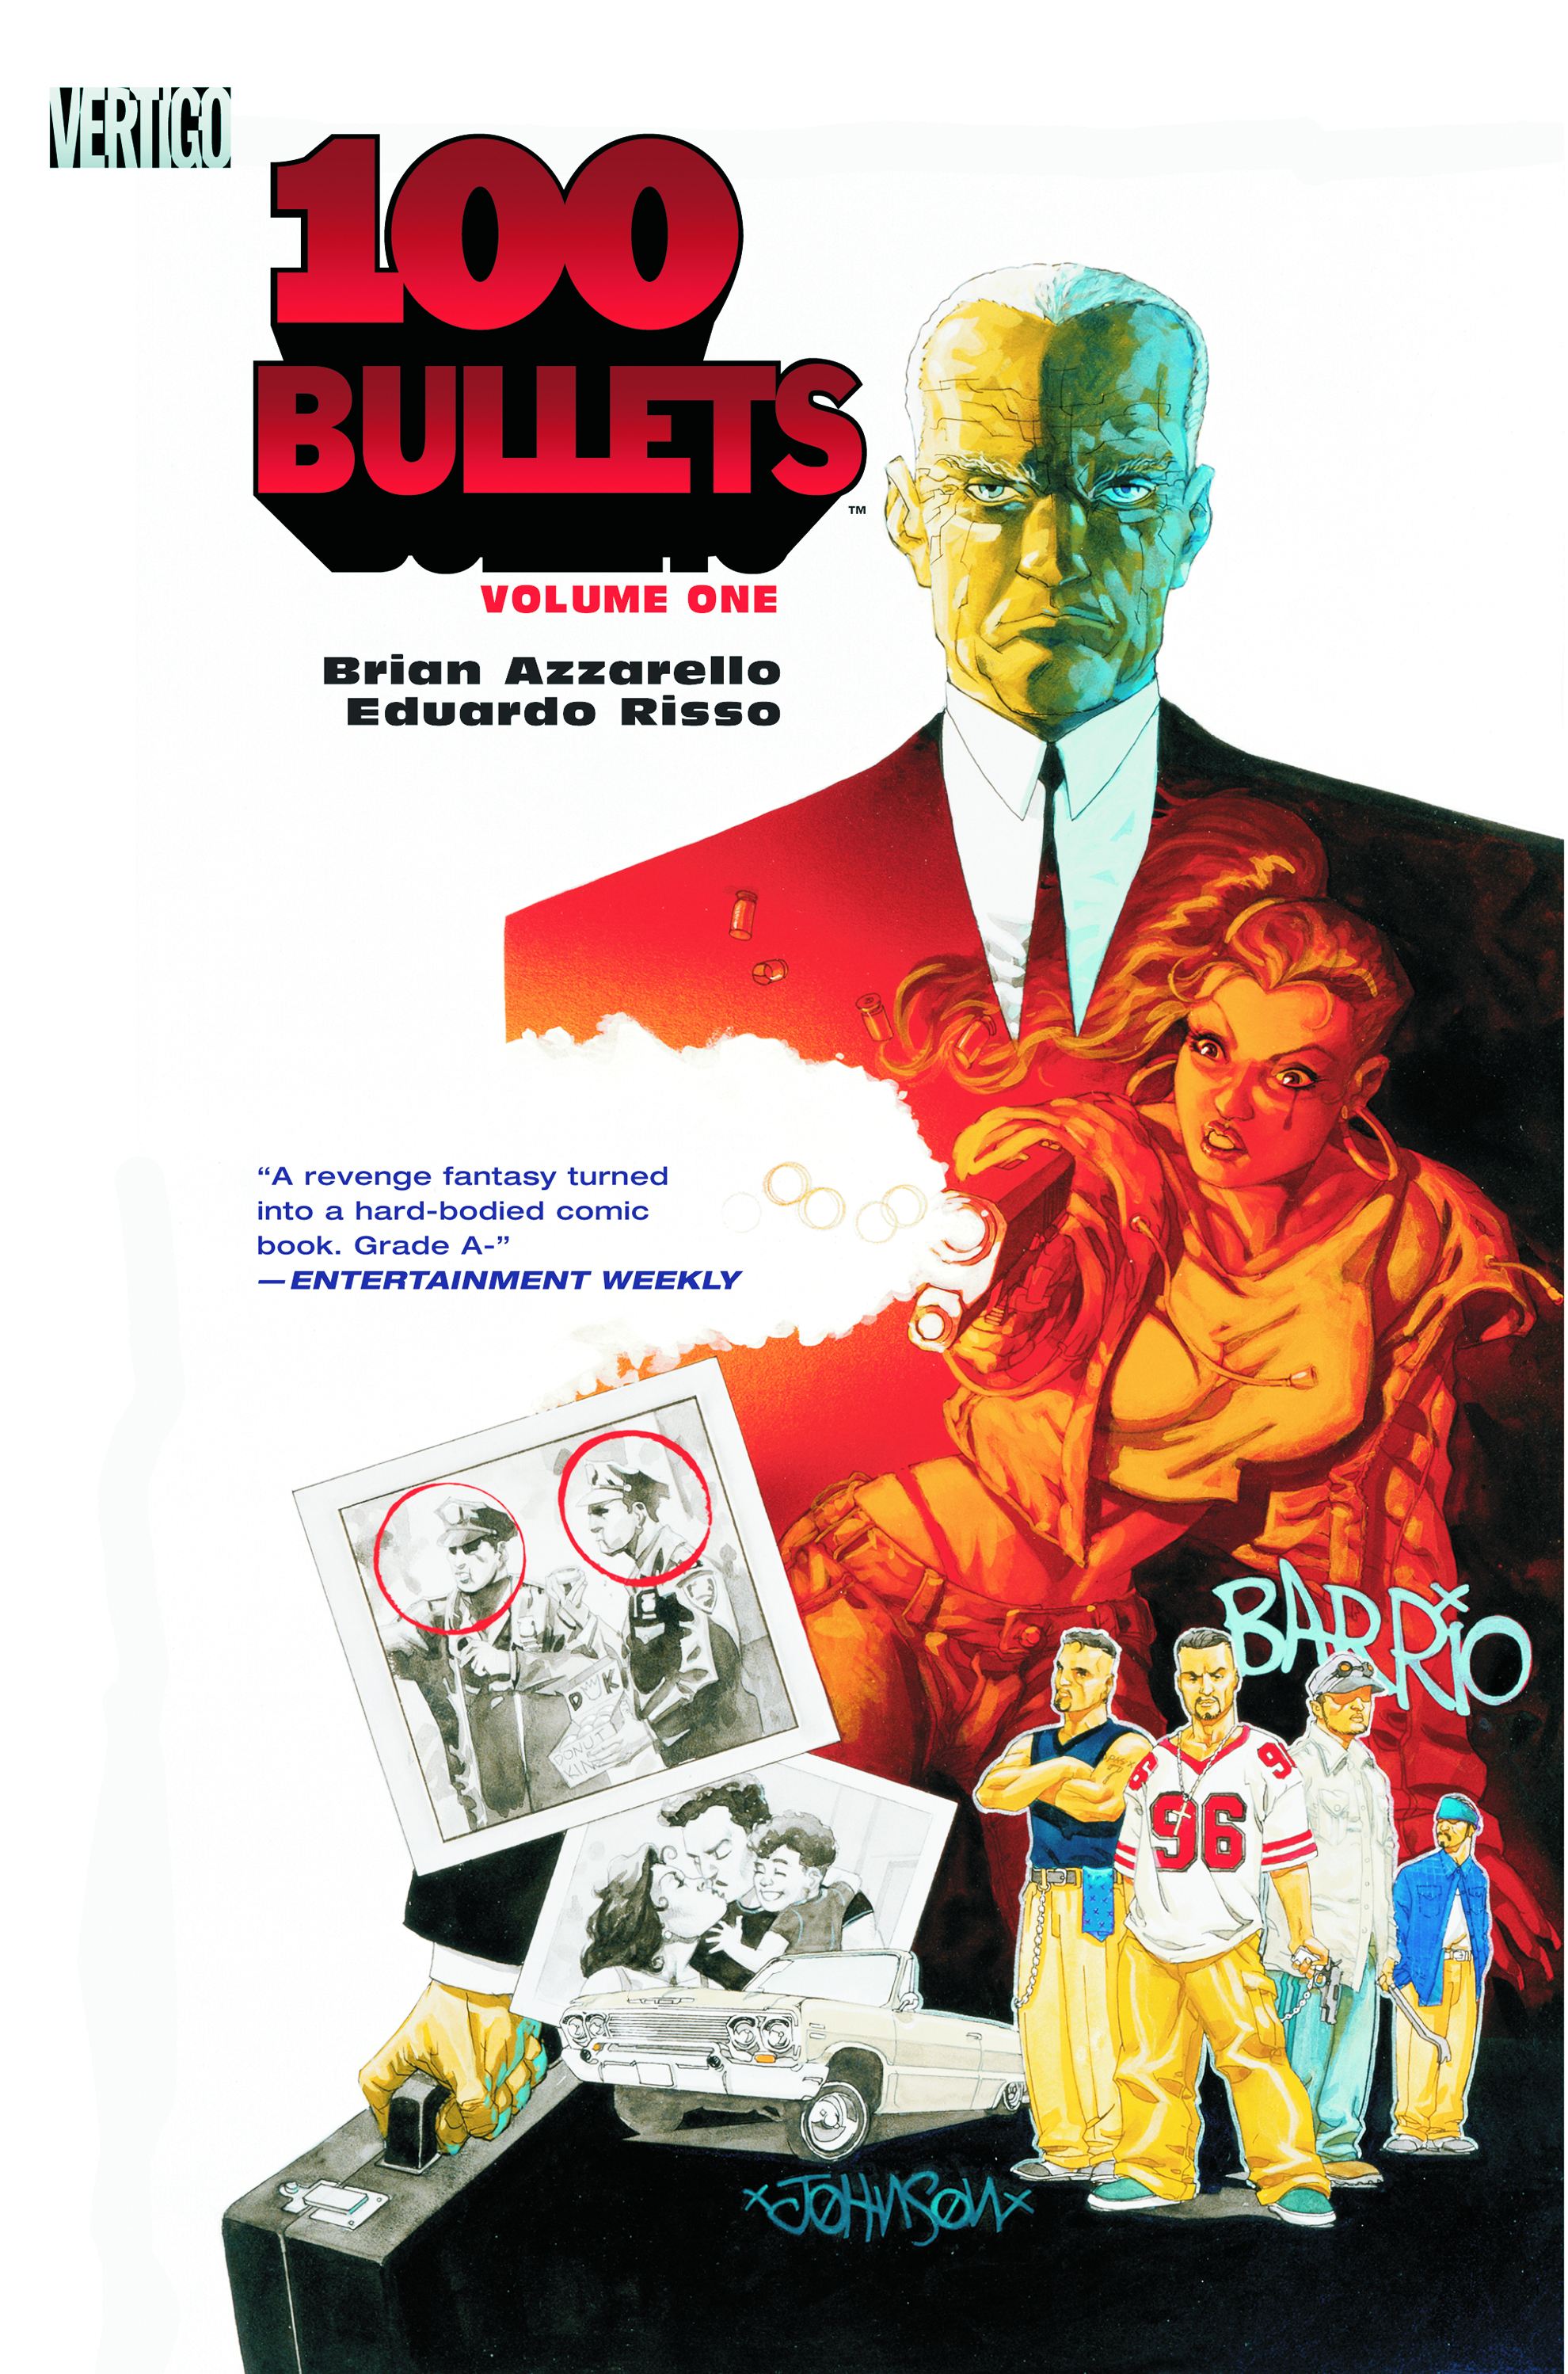 100 bullets book 1